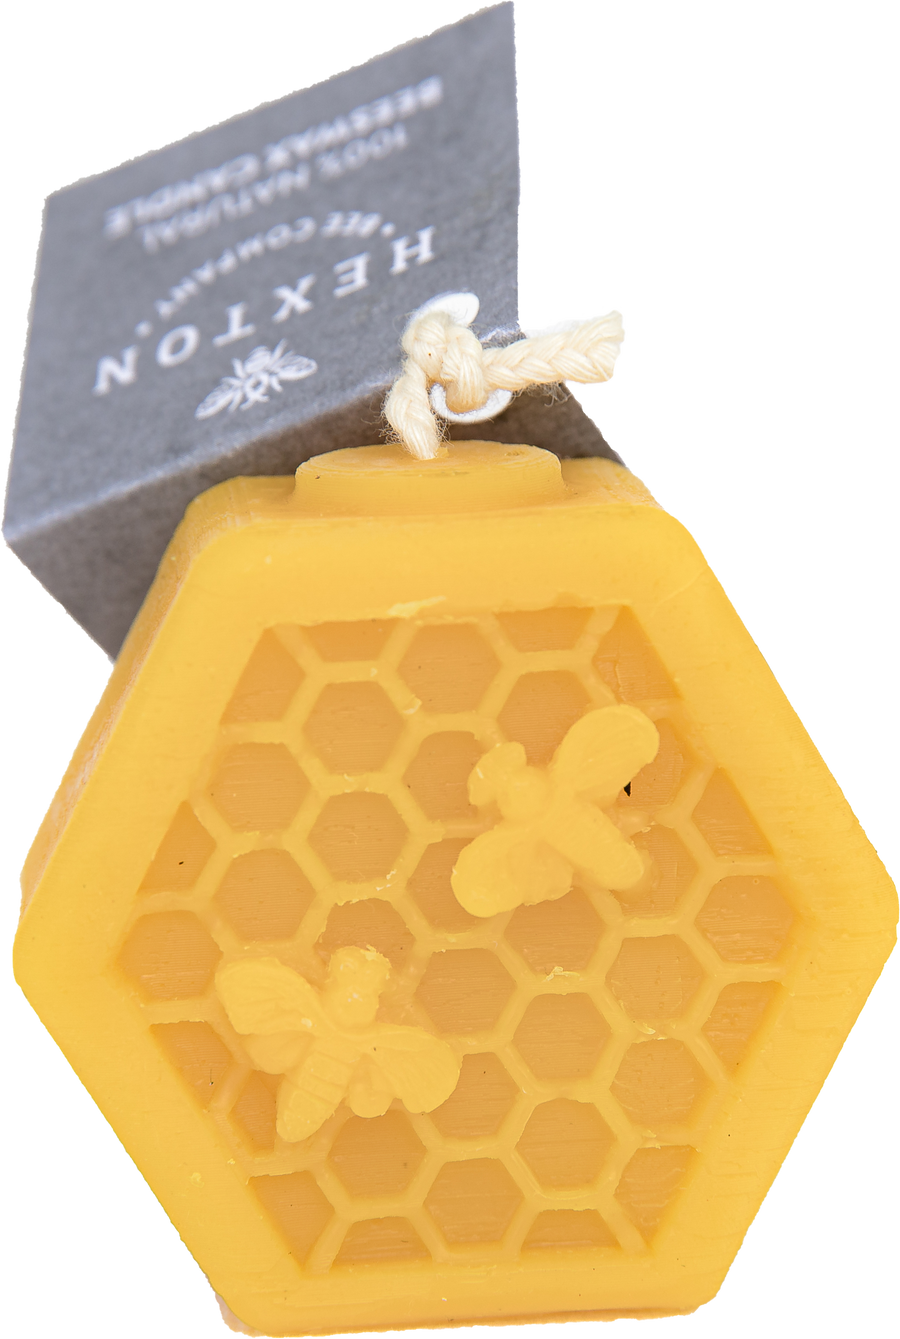 Hexagon Bee Votive Candle